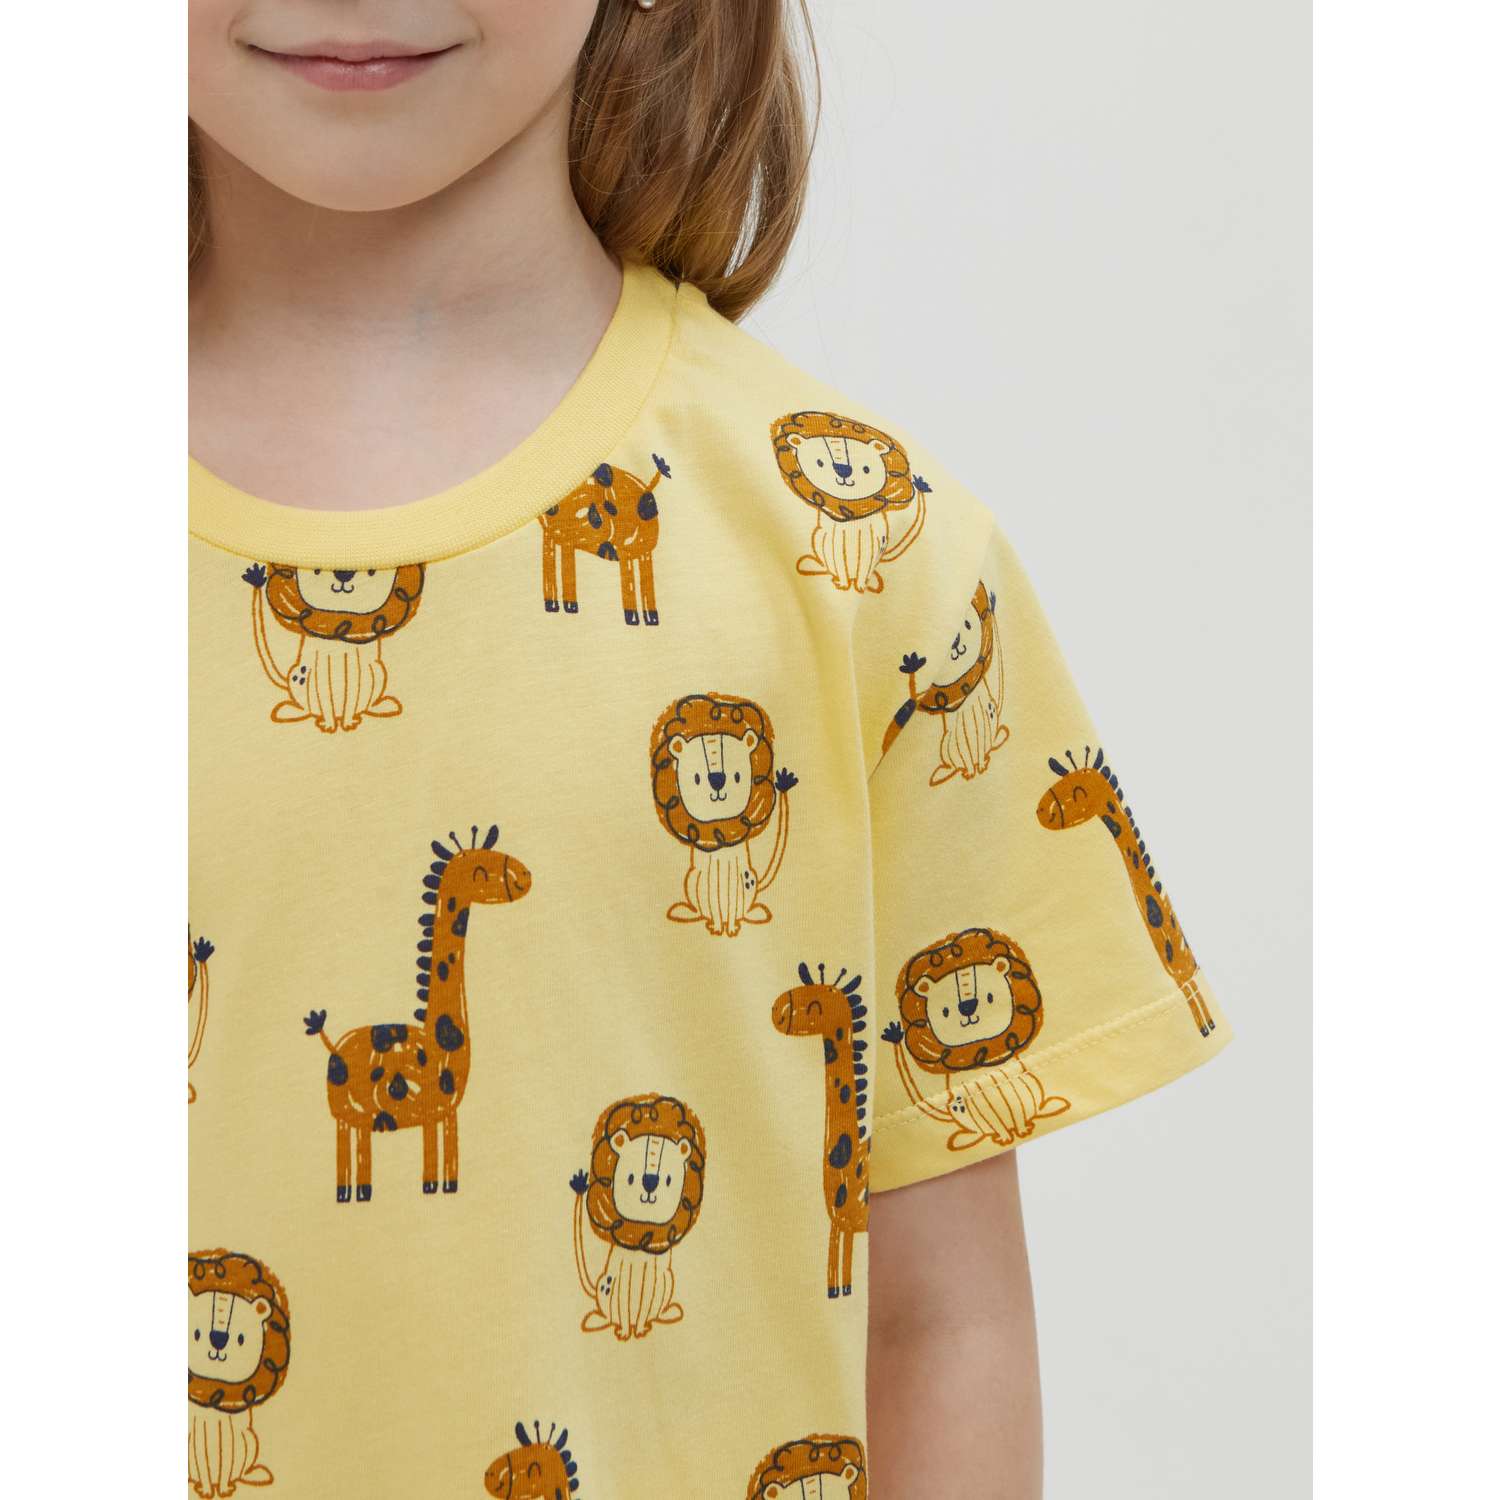 Пижама ISSHOP пижама желтая с шортами - фото 10